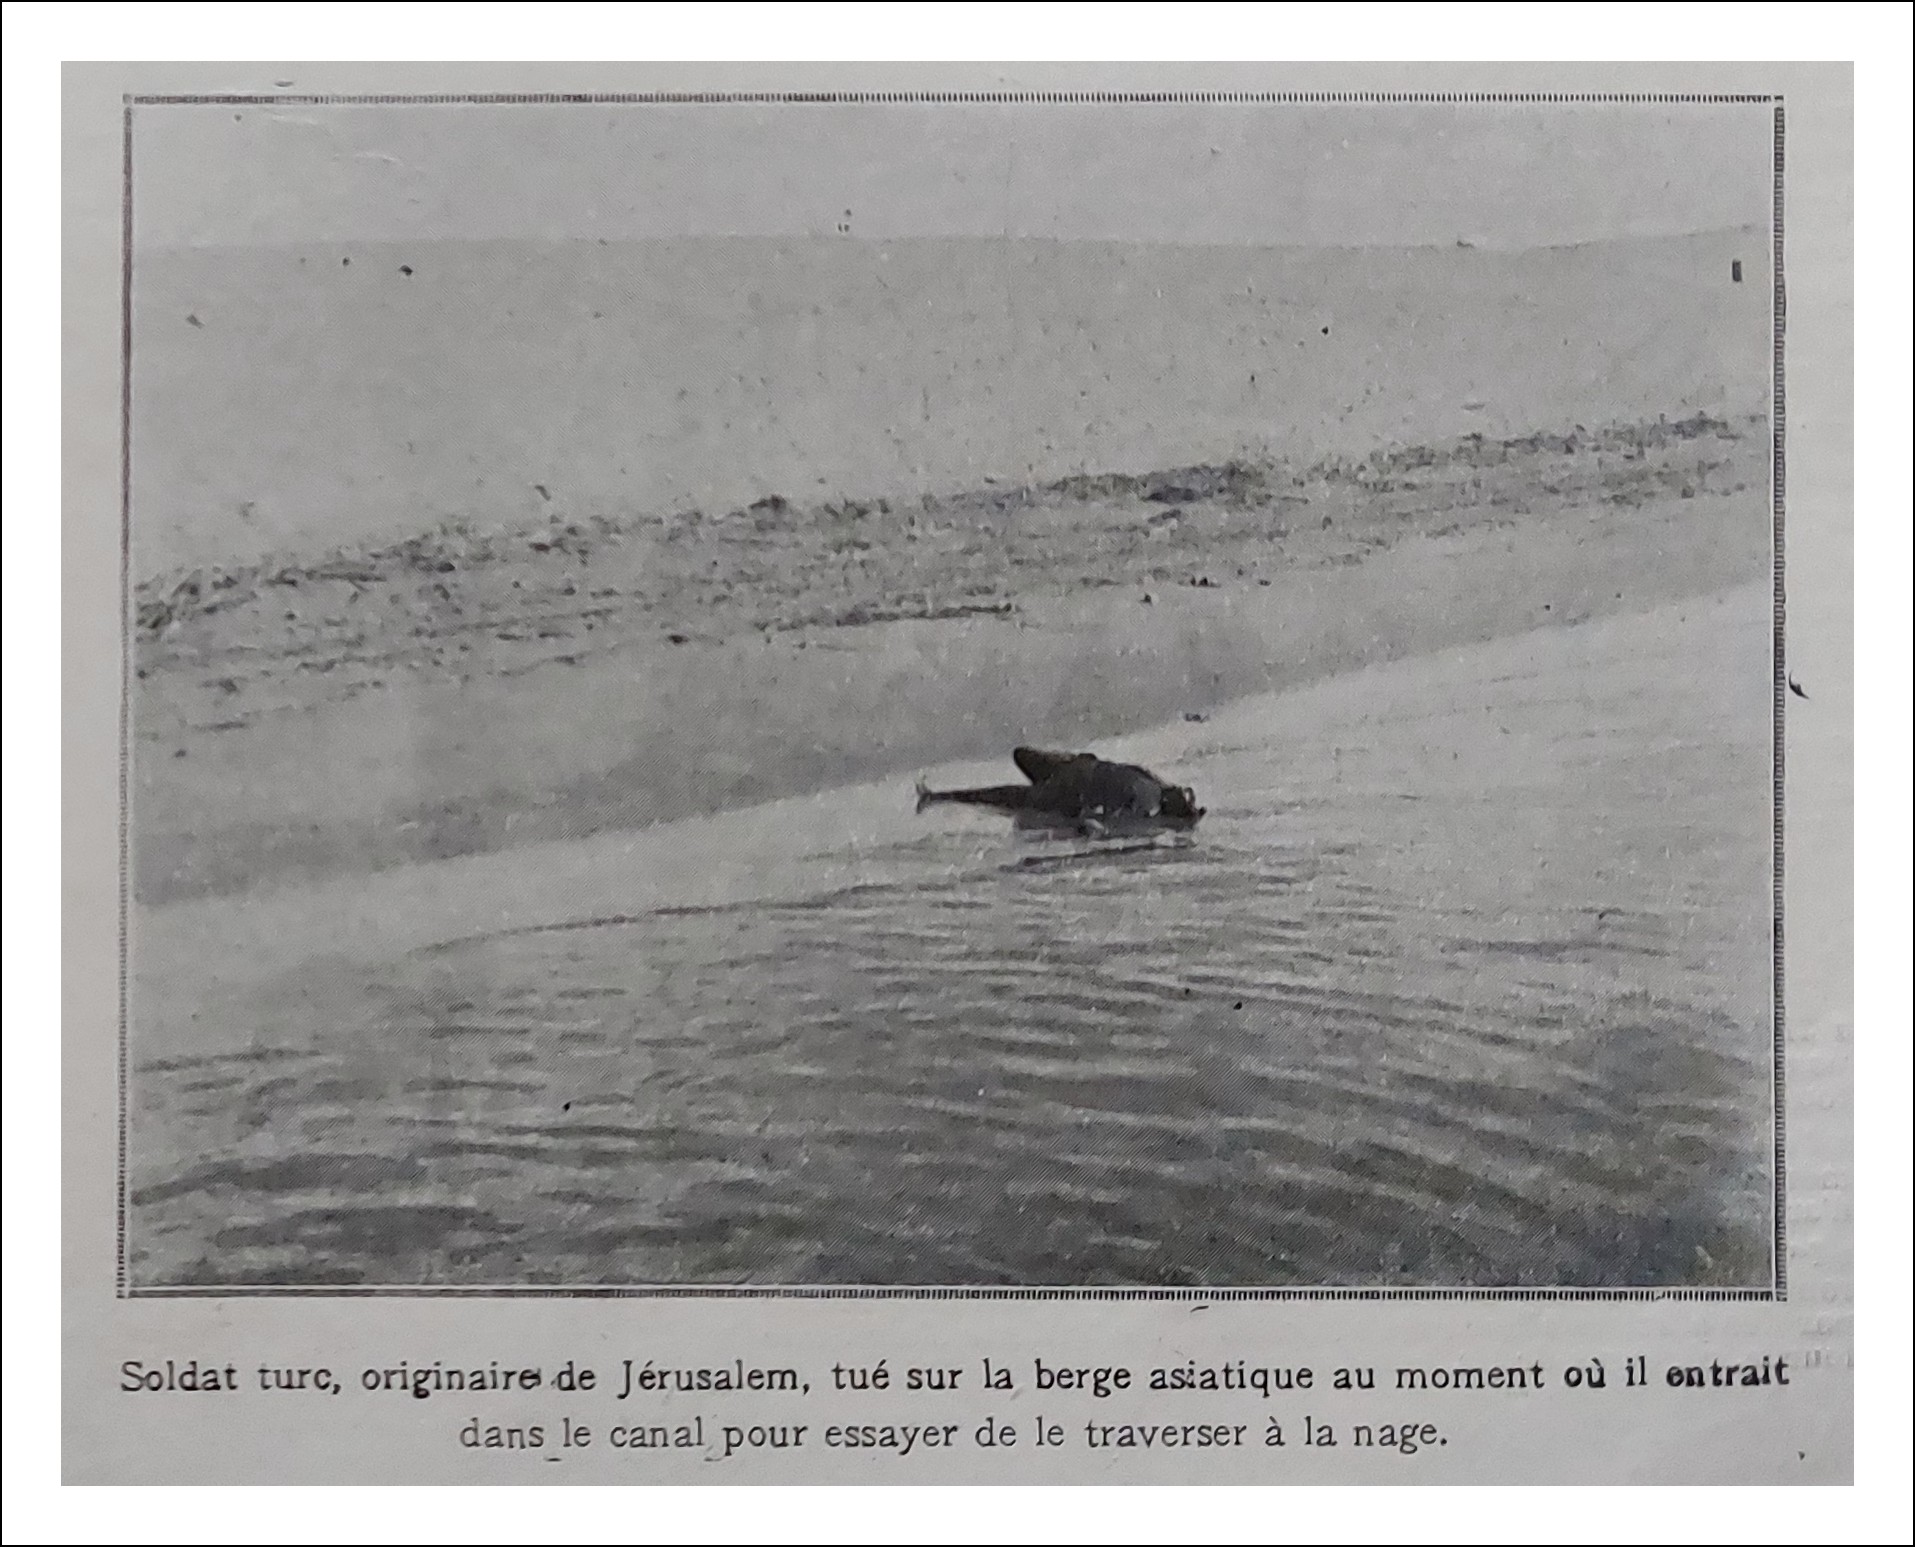 Canal de Suez LI 1915-02-27 F -.jpg